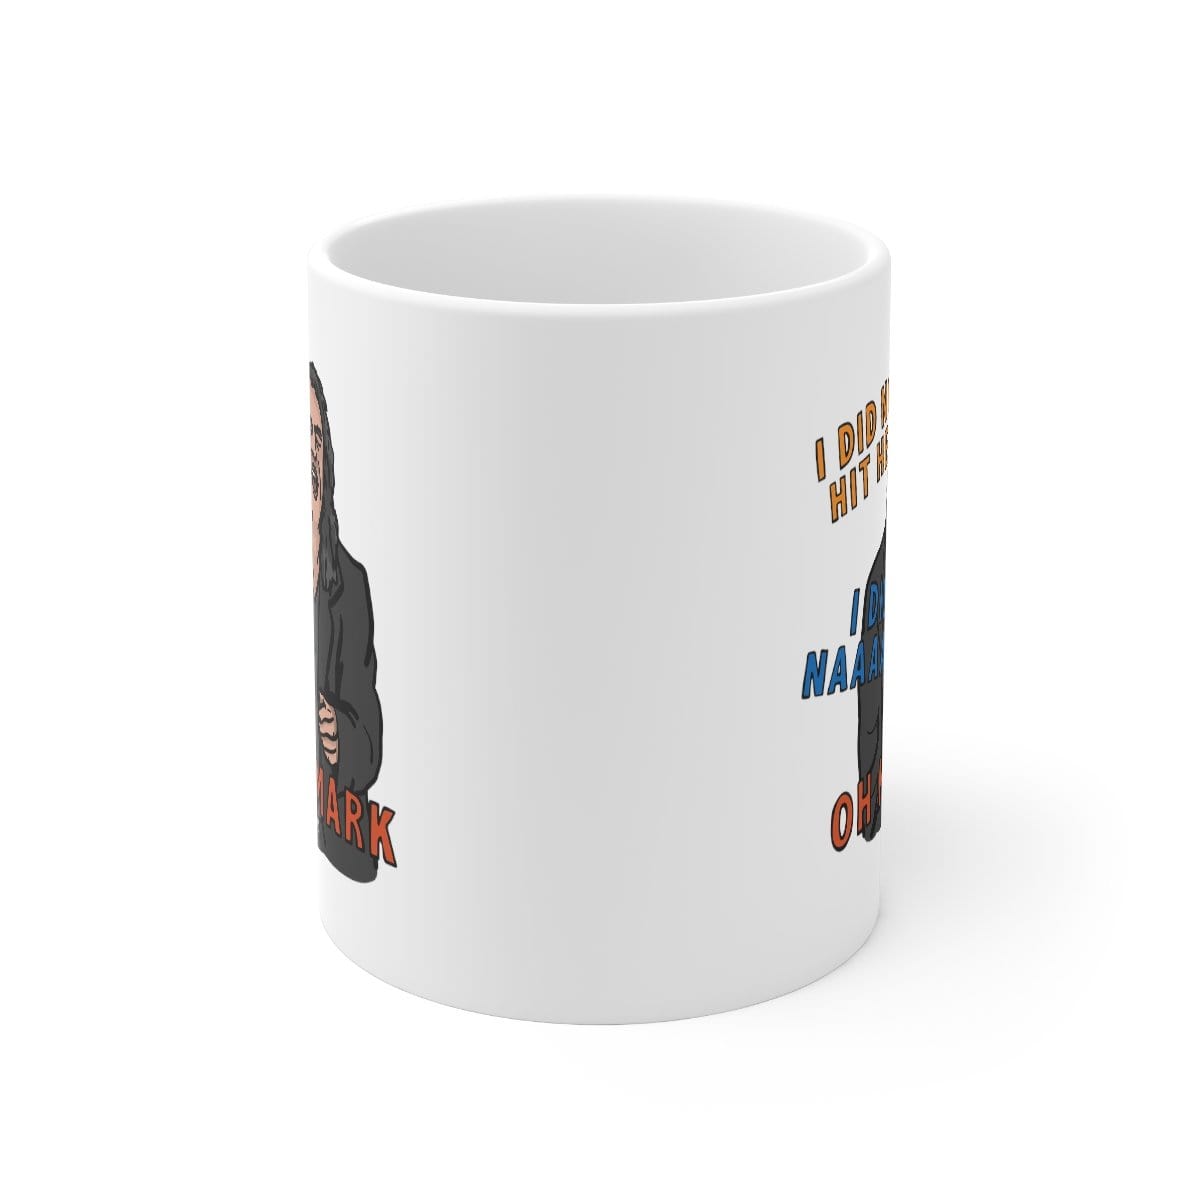 Oh Hi Mark 👋🏻 - Coffee Mug